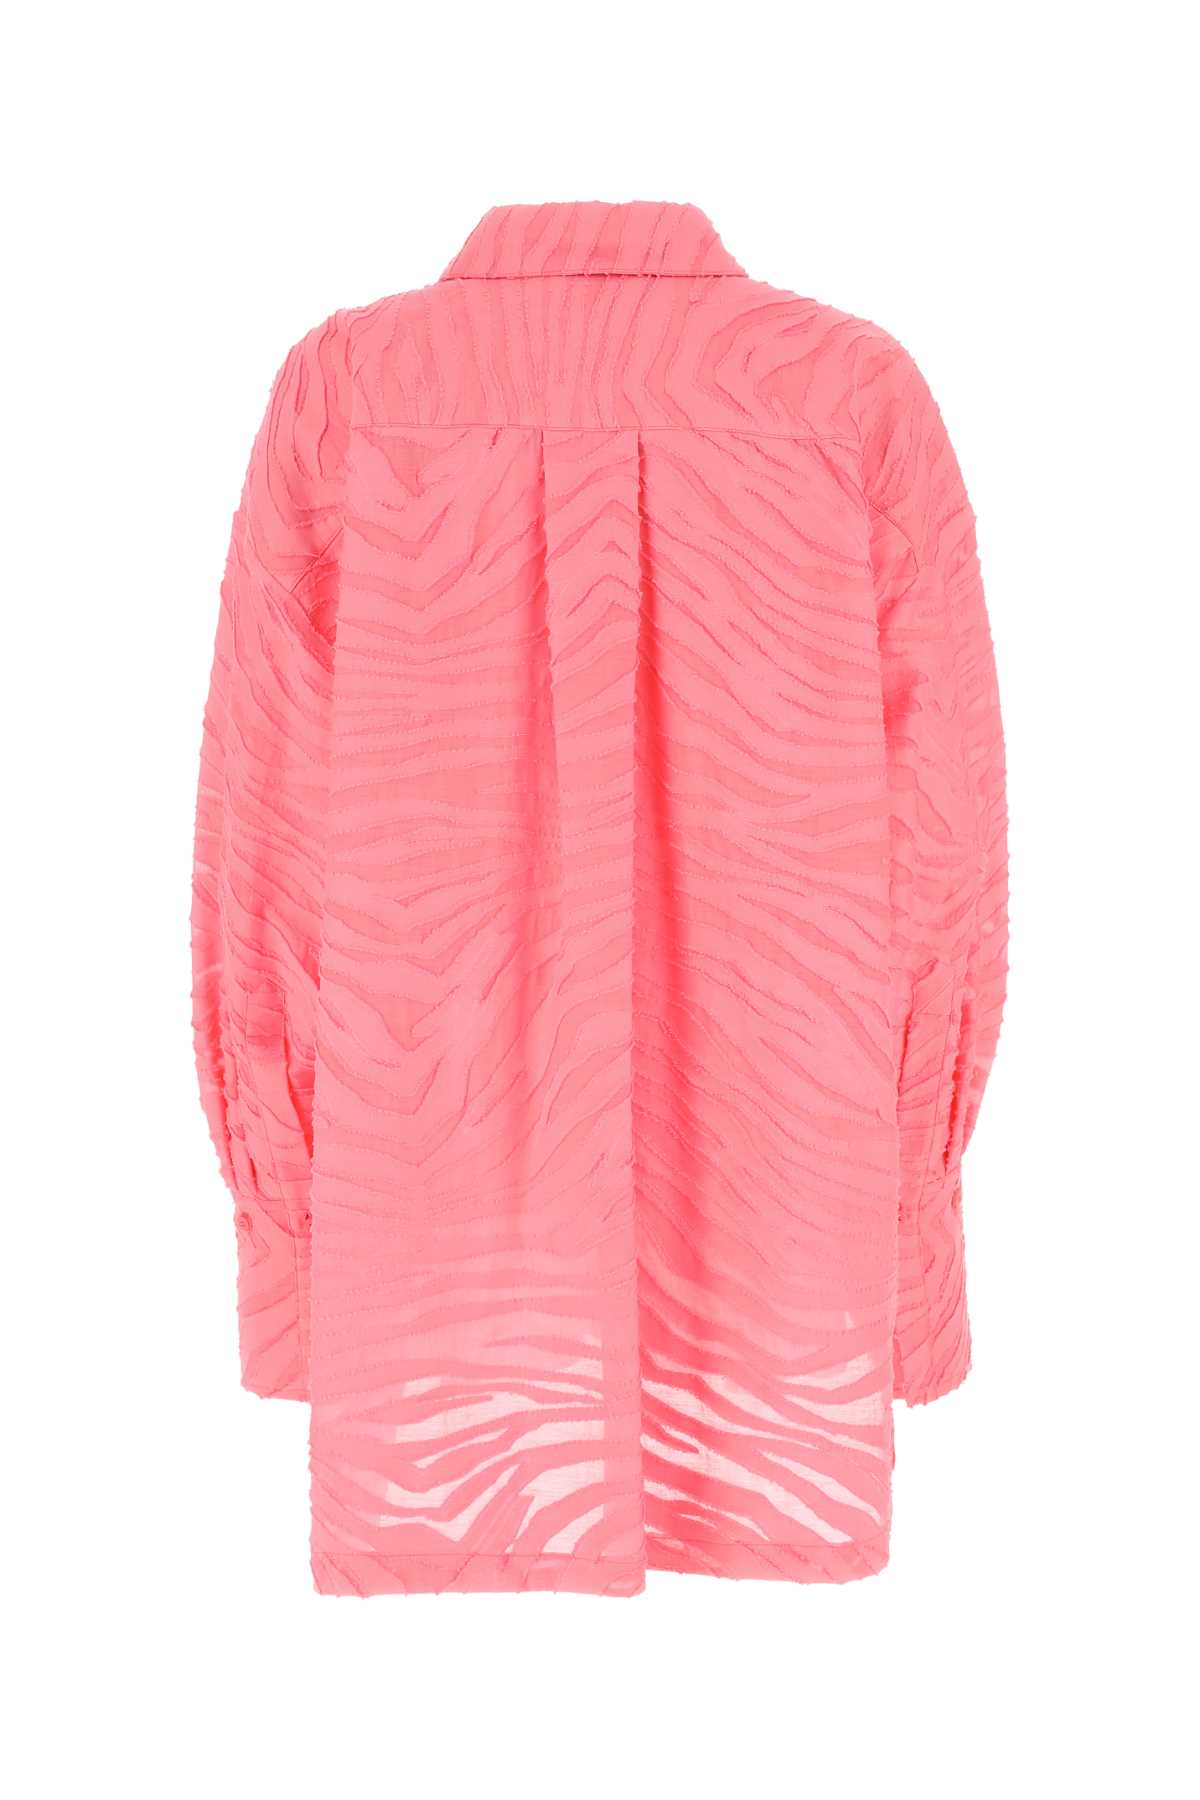 Attico Pink Cotton Blend Diana Shirt In 119